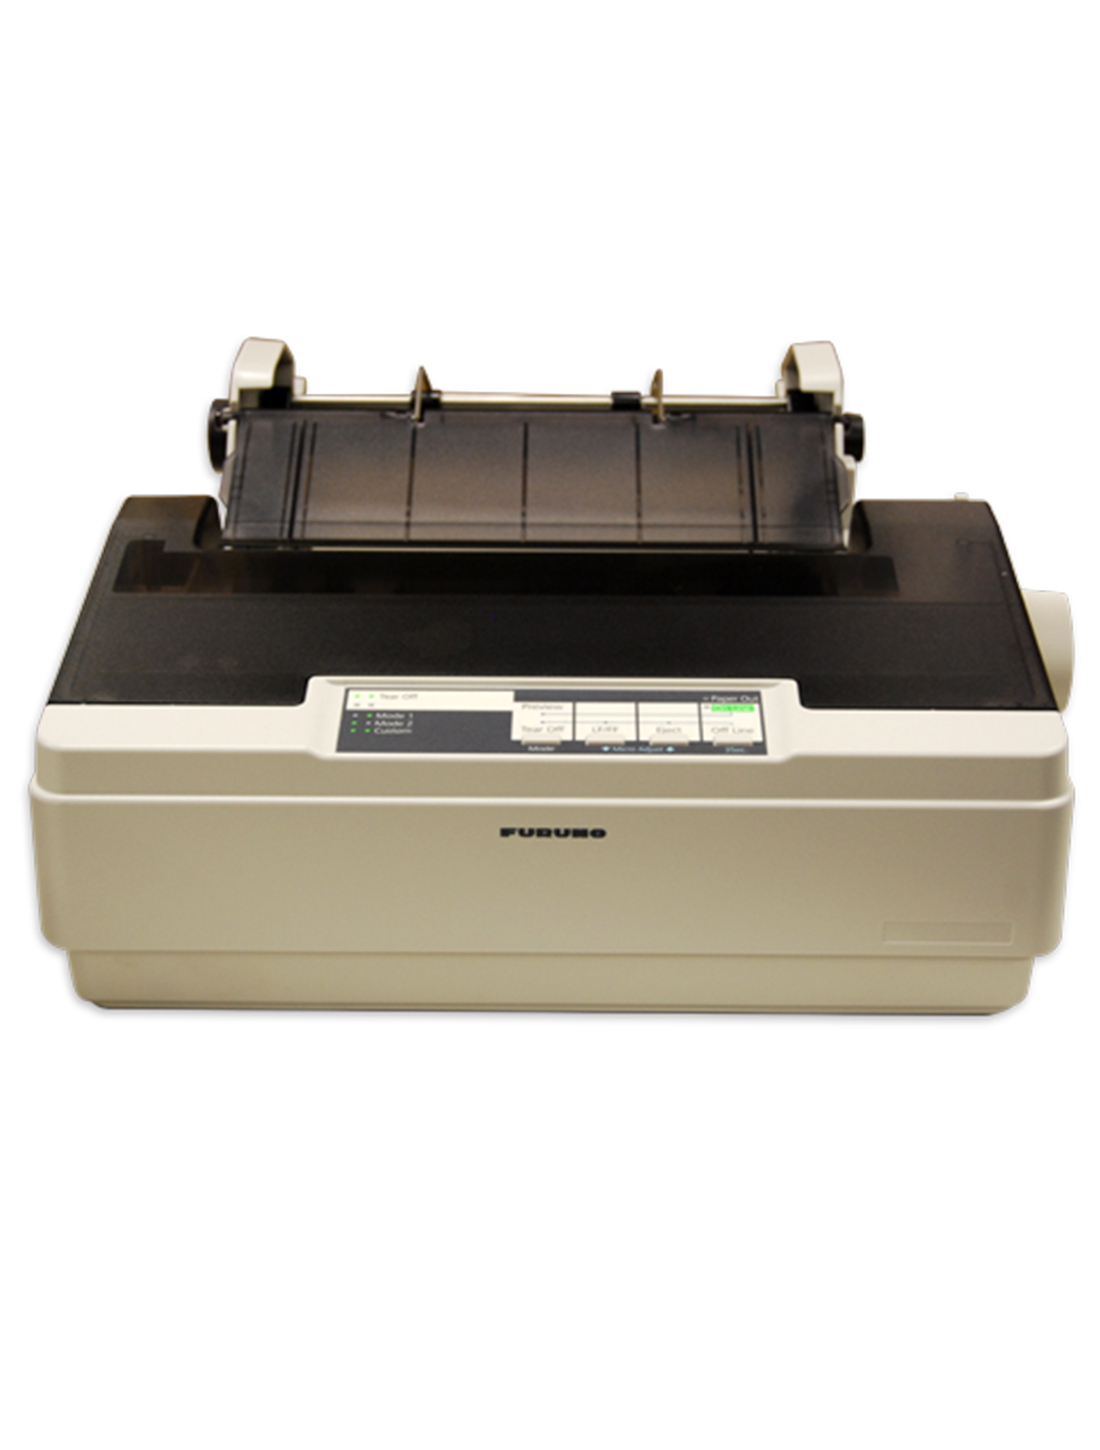 Printer PP 520